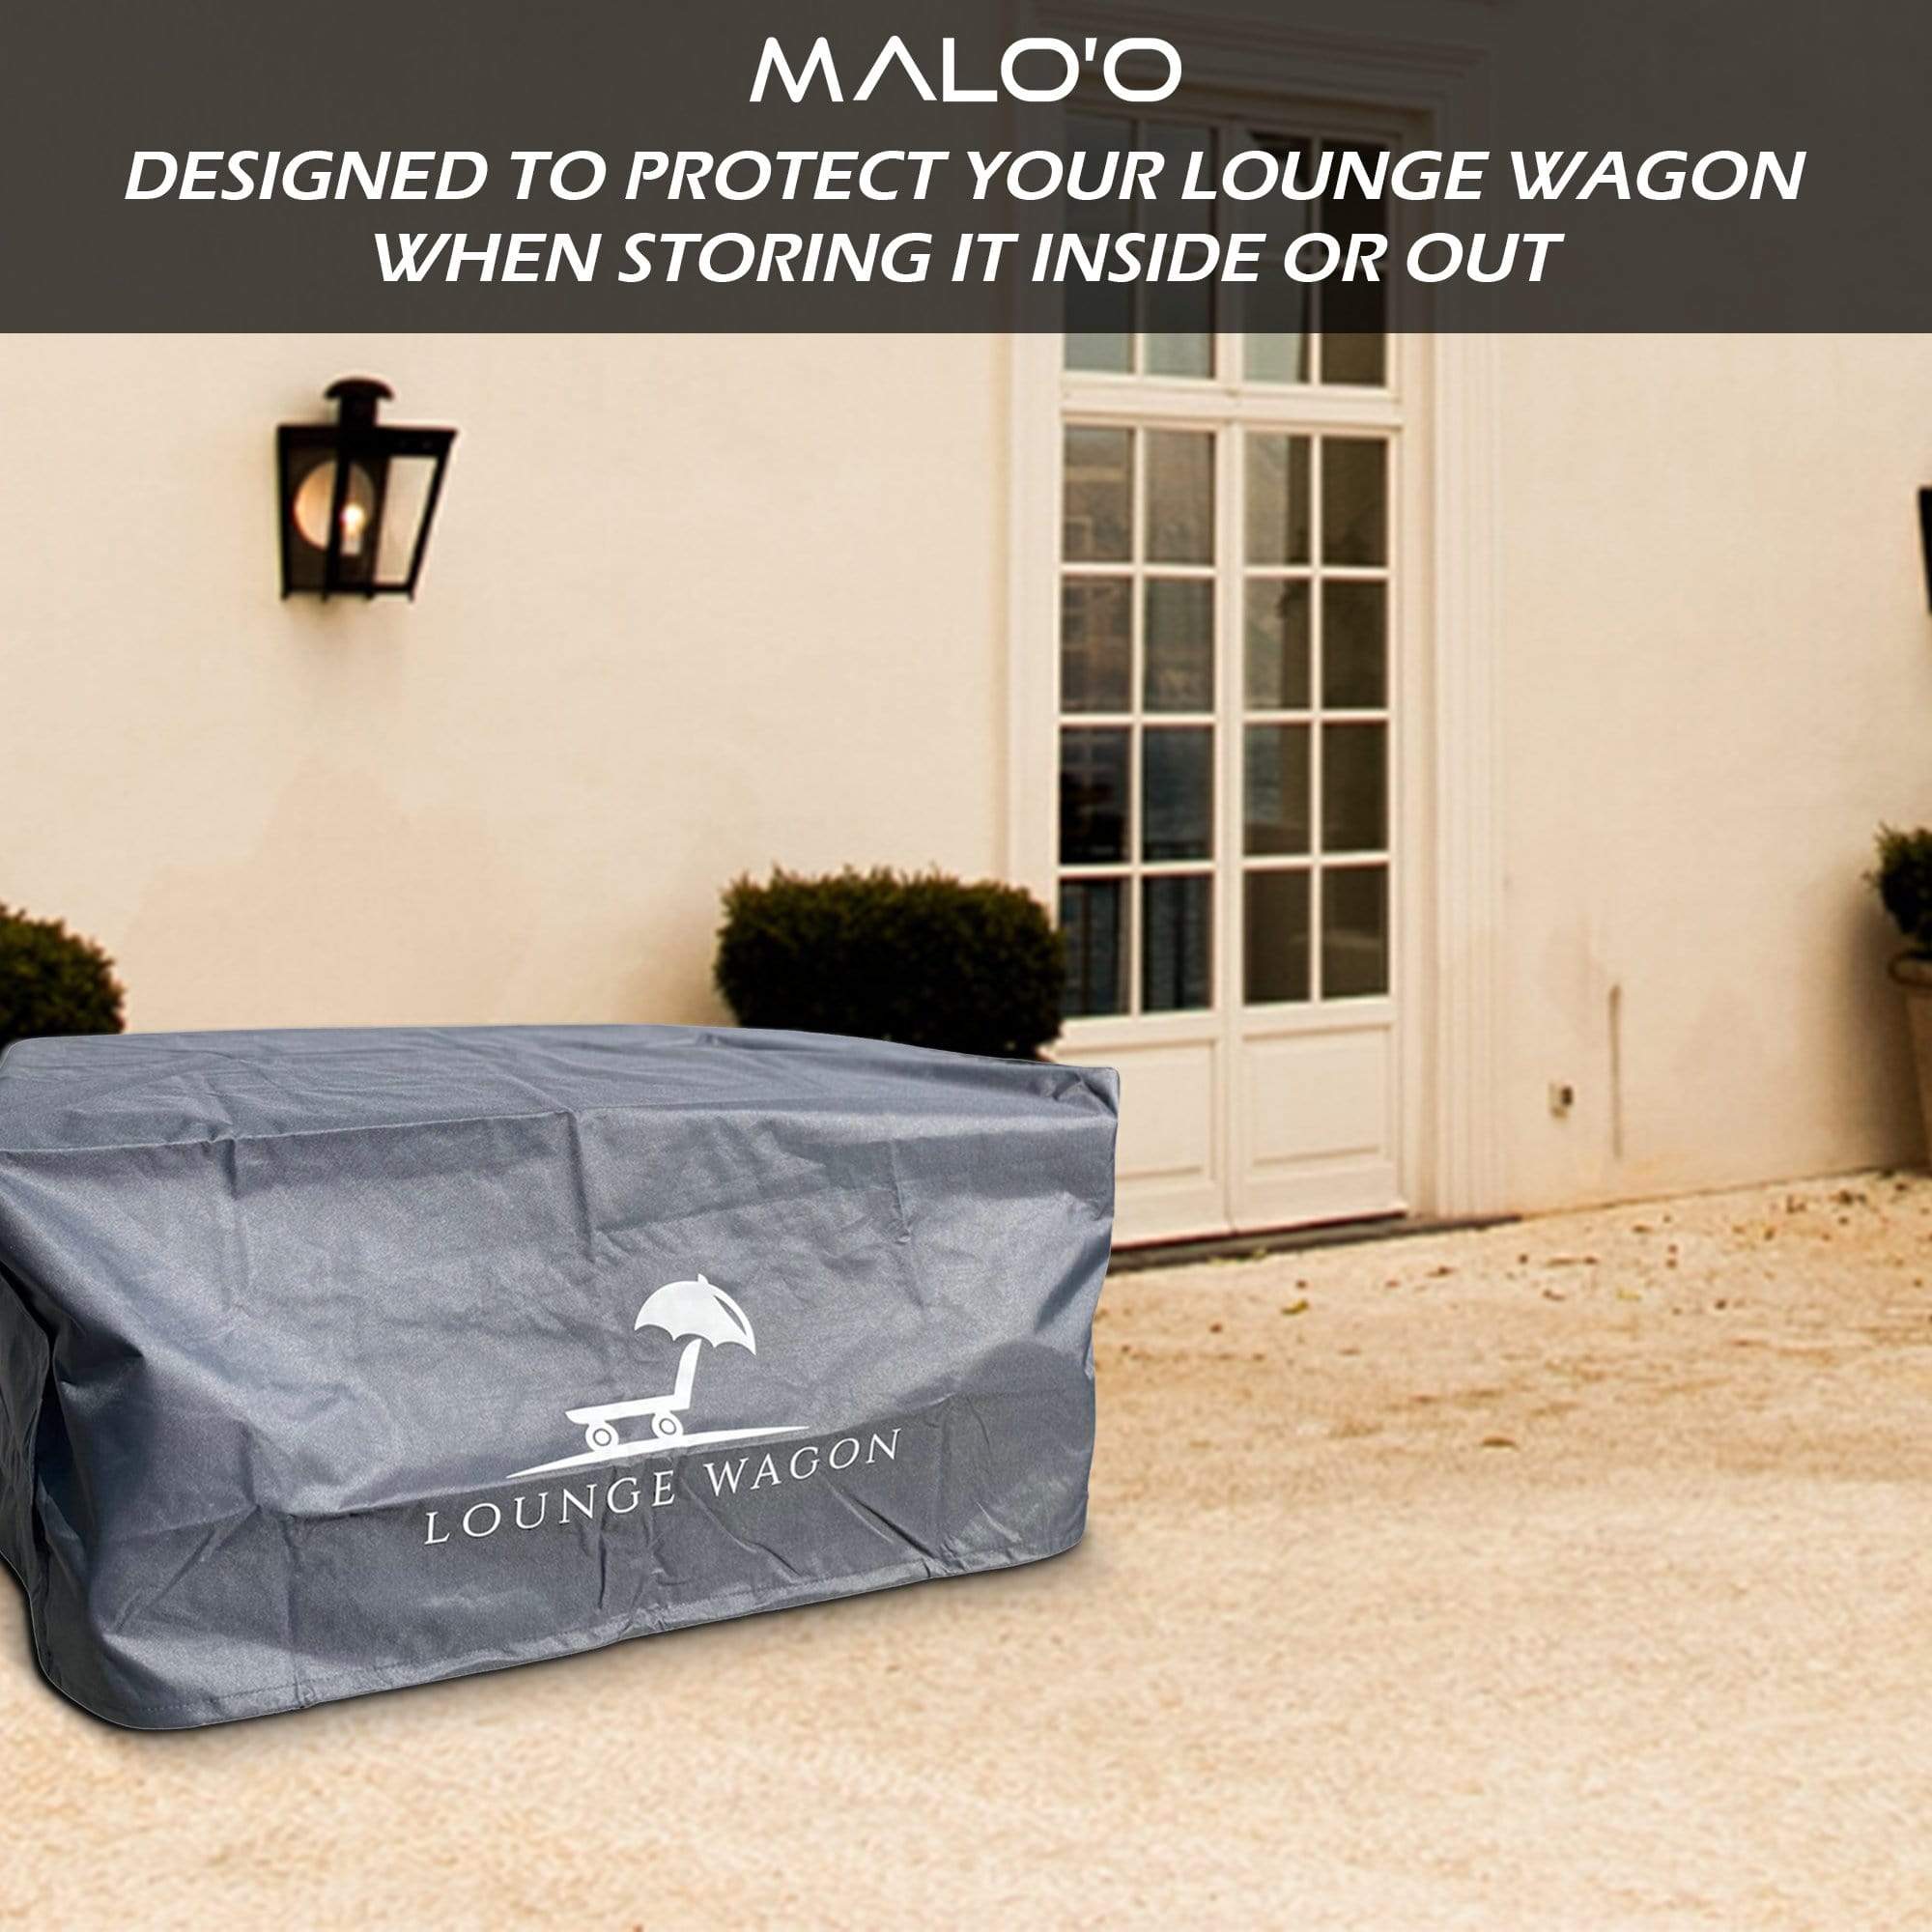 Malo'o Racks Lounge Wagon Storage Cover